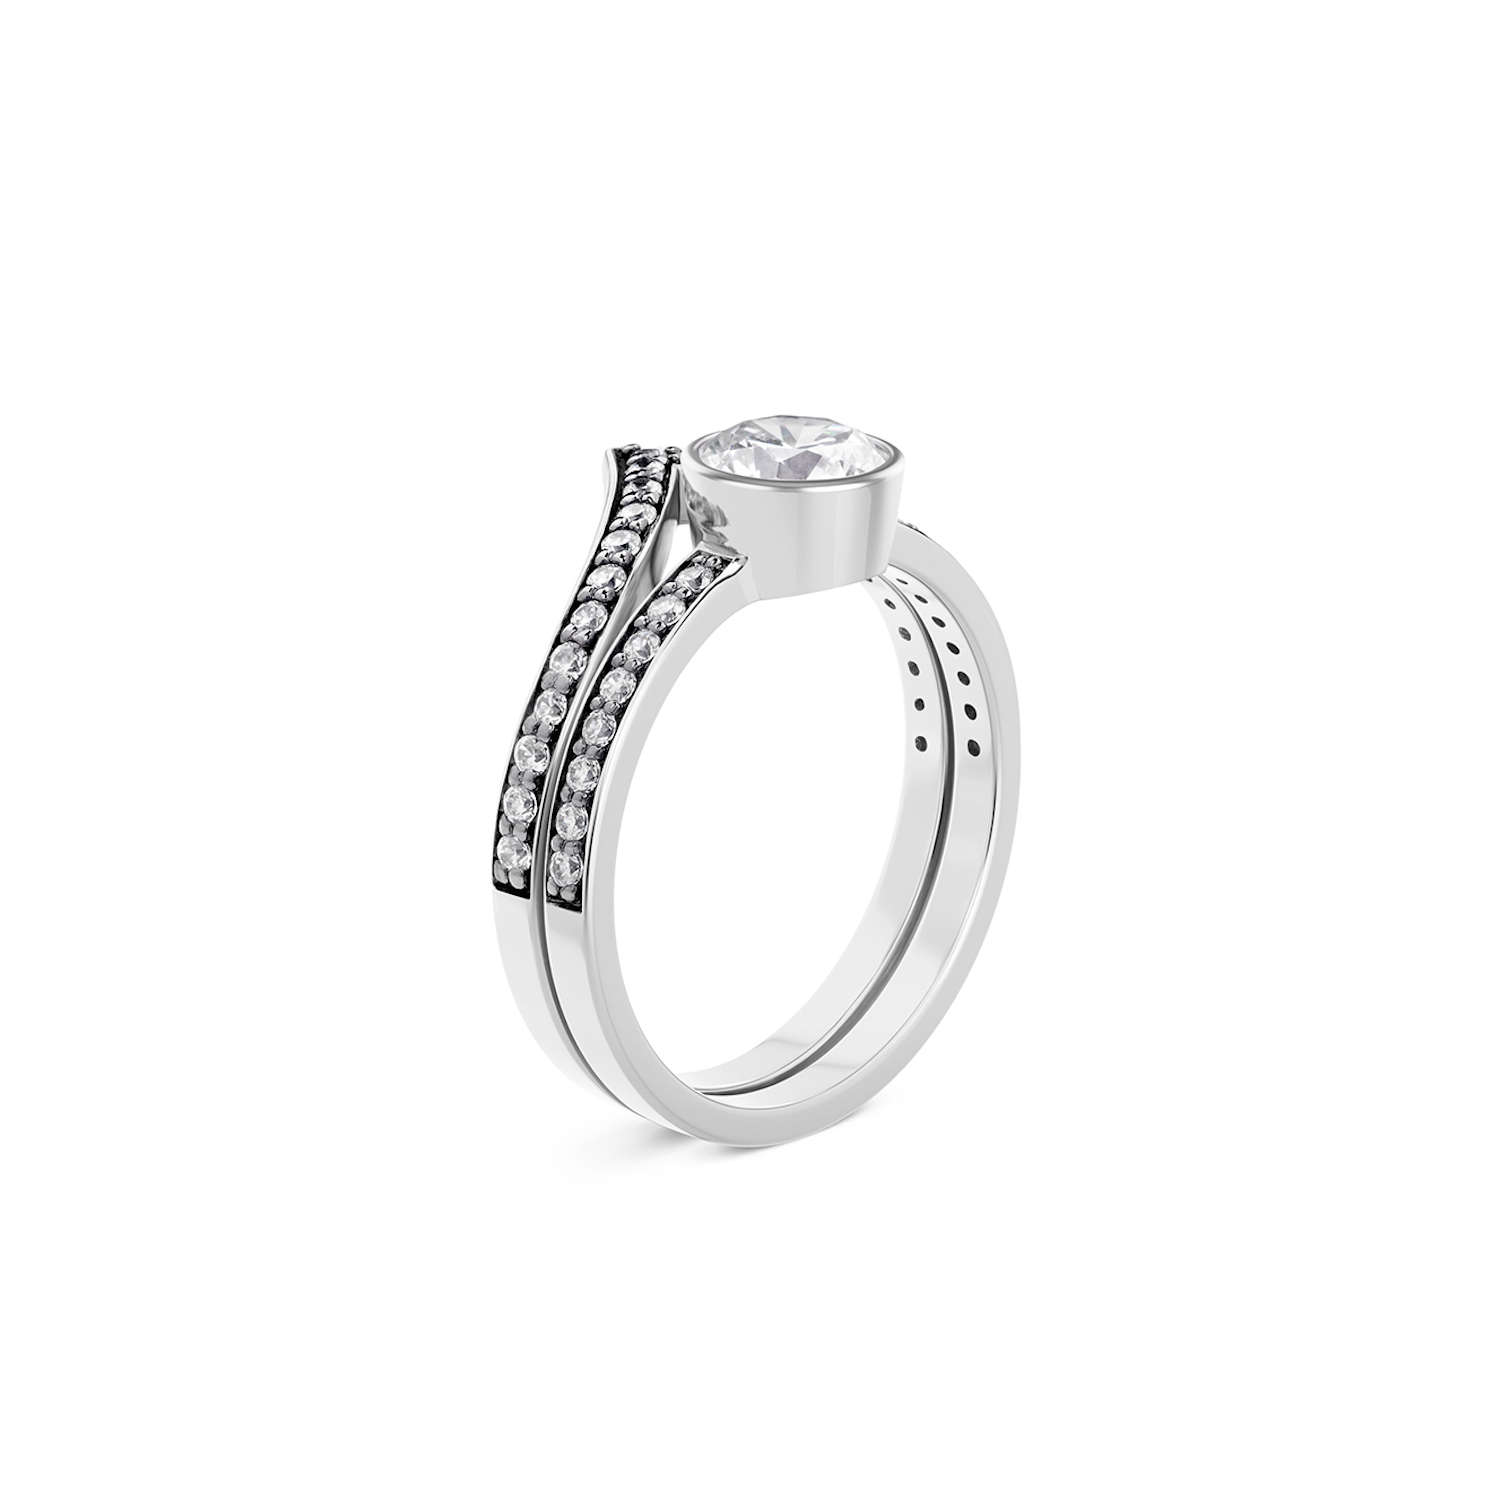 Cleopatra Chevron Diamond Ring Set. 18k White Gold or Platinum. - MONARC CONCIERGE